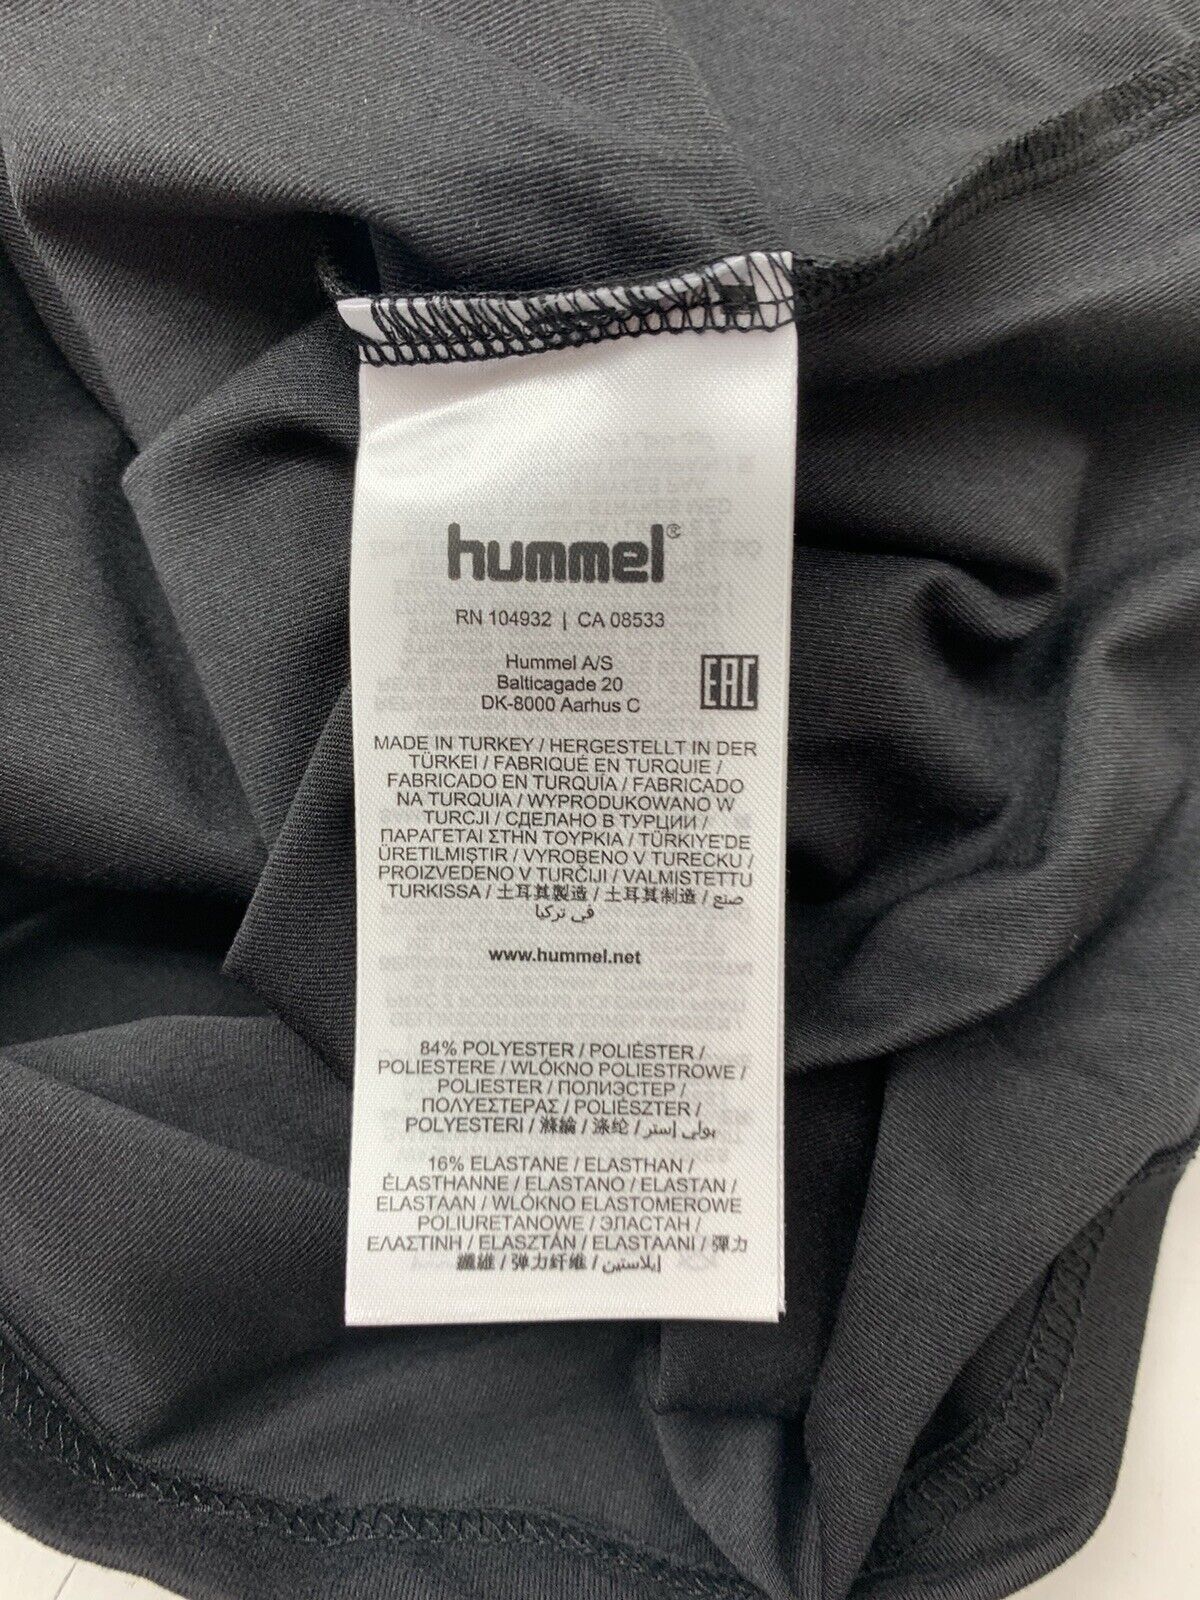 Hummel Mens Virgil Black T Shirt Size Medium New - beyond exchange